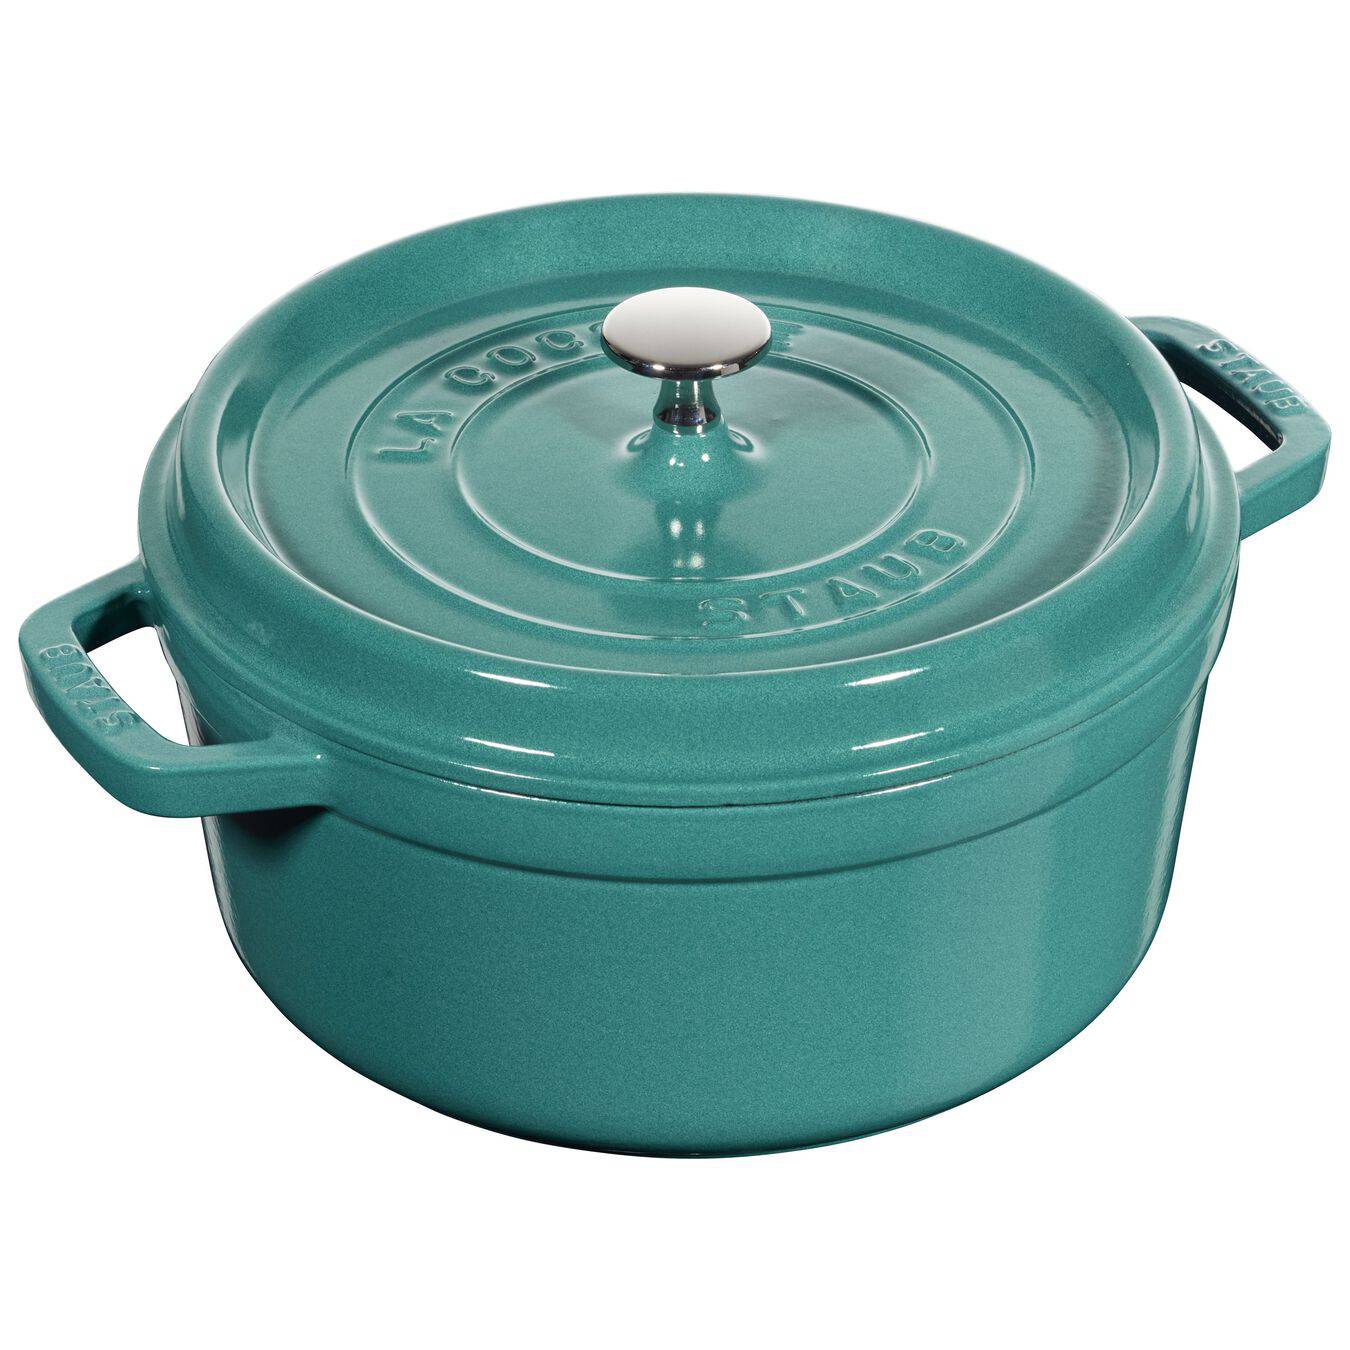 Staub Oven Round Cocotte, 4-qt, Turquoise - Kitchen Universe